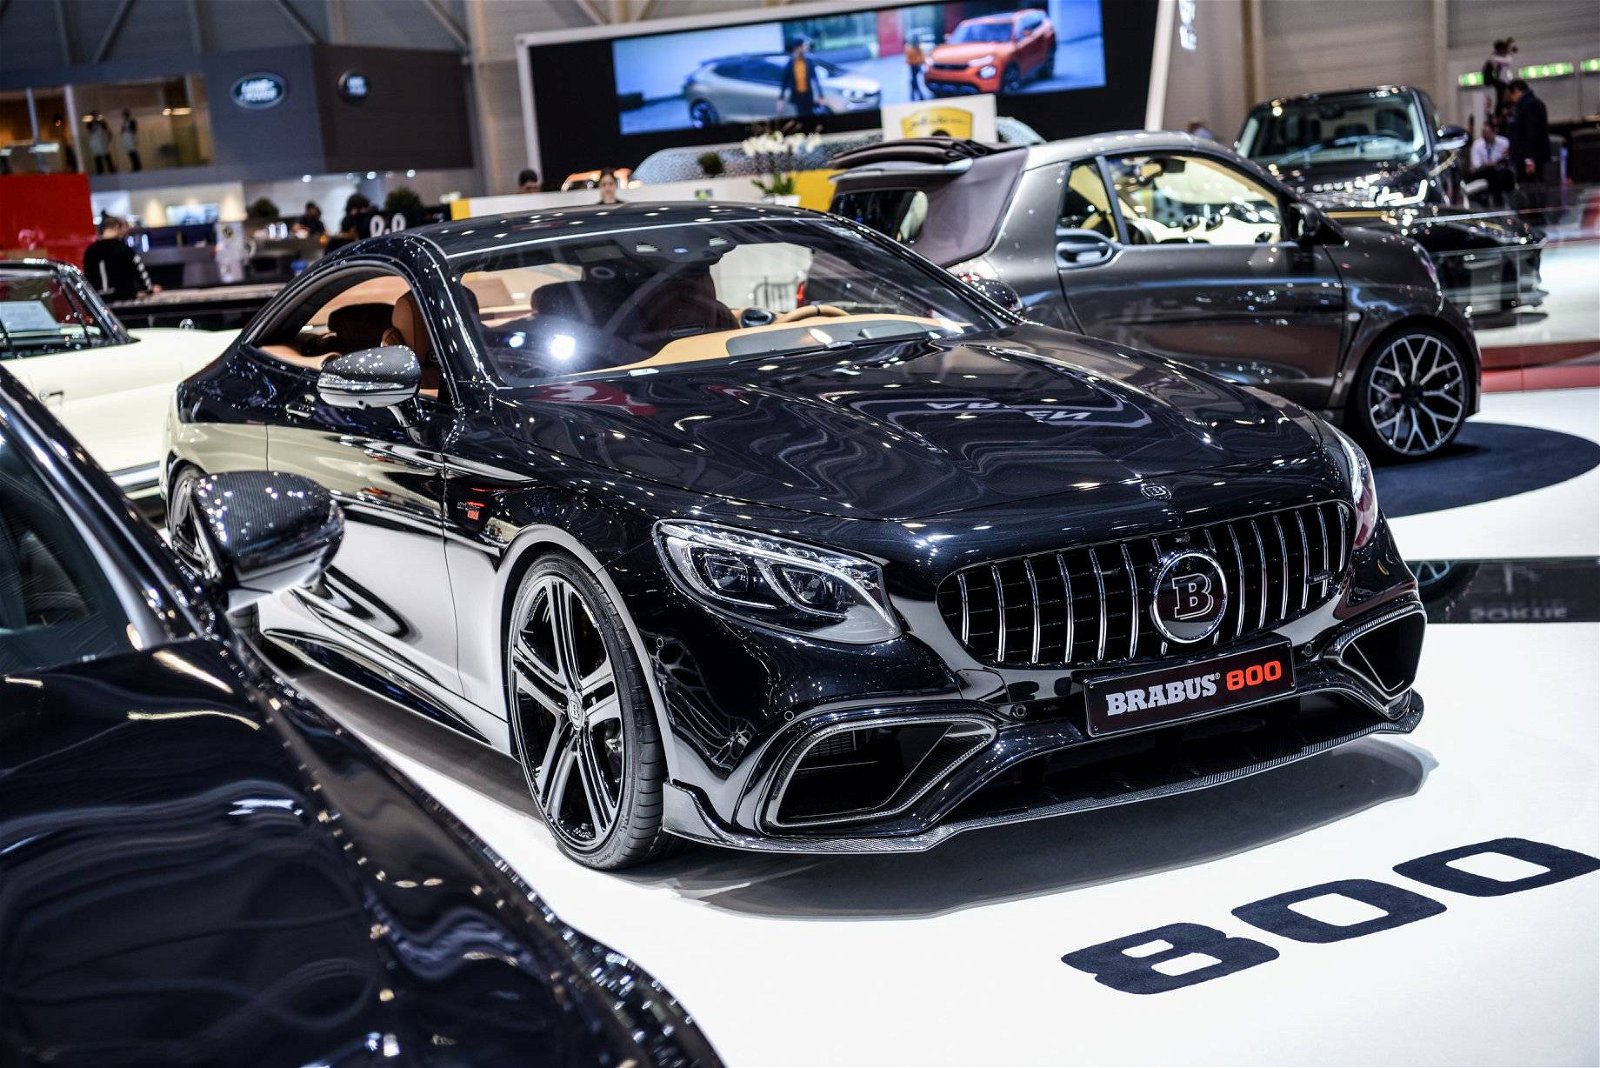 Brabus-800-based-on-Mercedes-AMG-S63-4MATIC+-Coupe-at-Geneva-Motor-Show-2